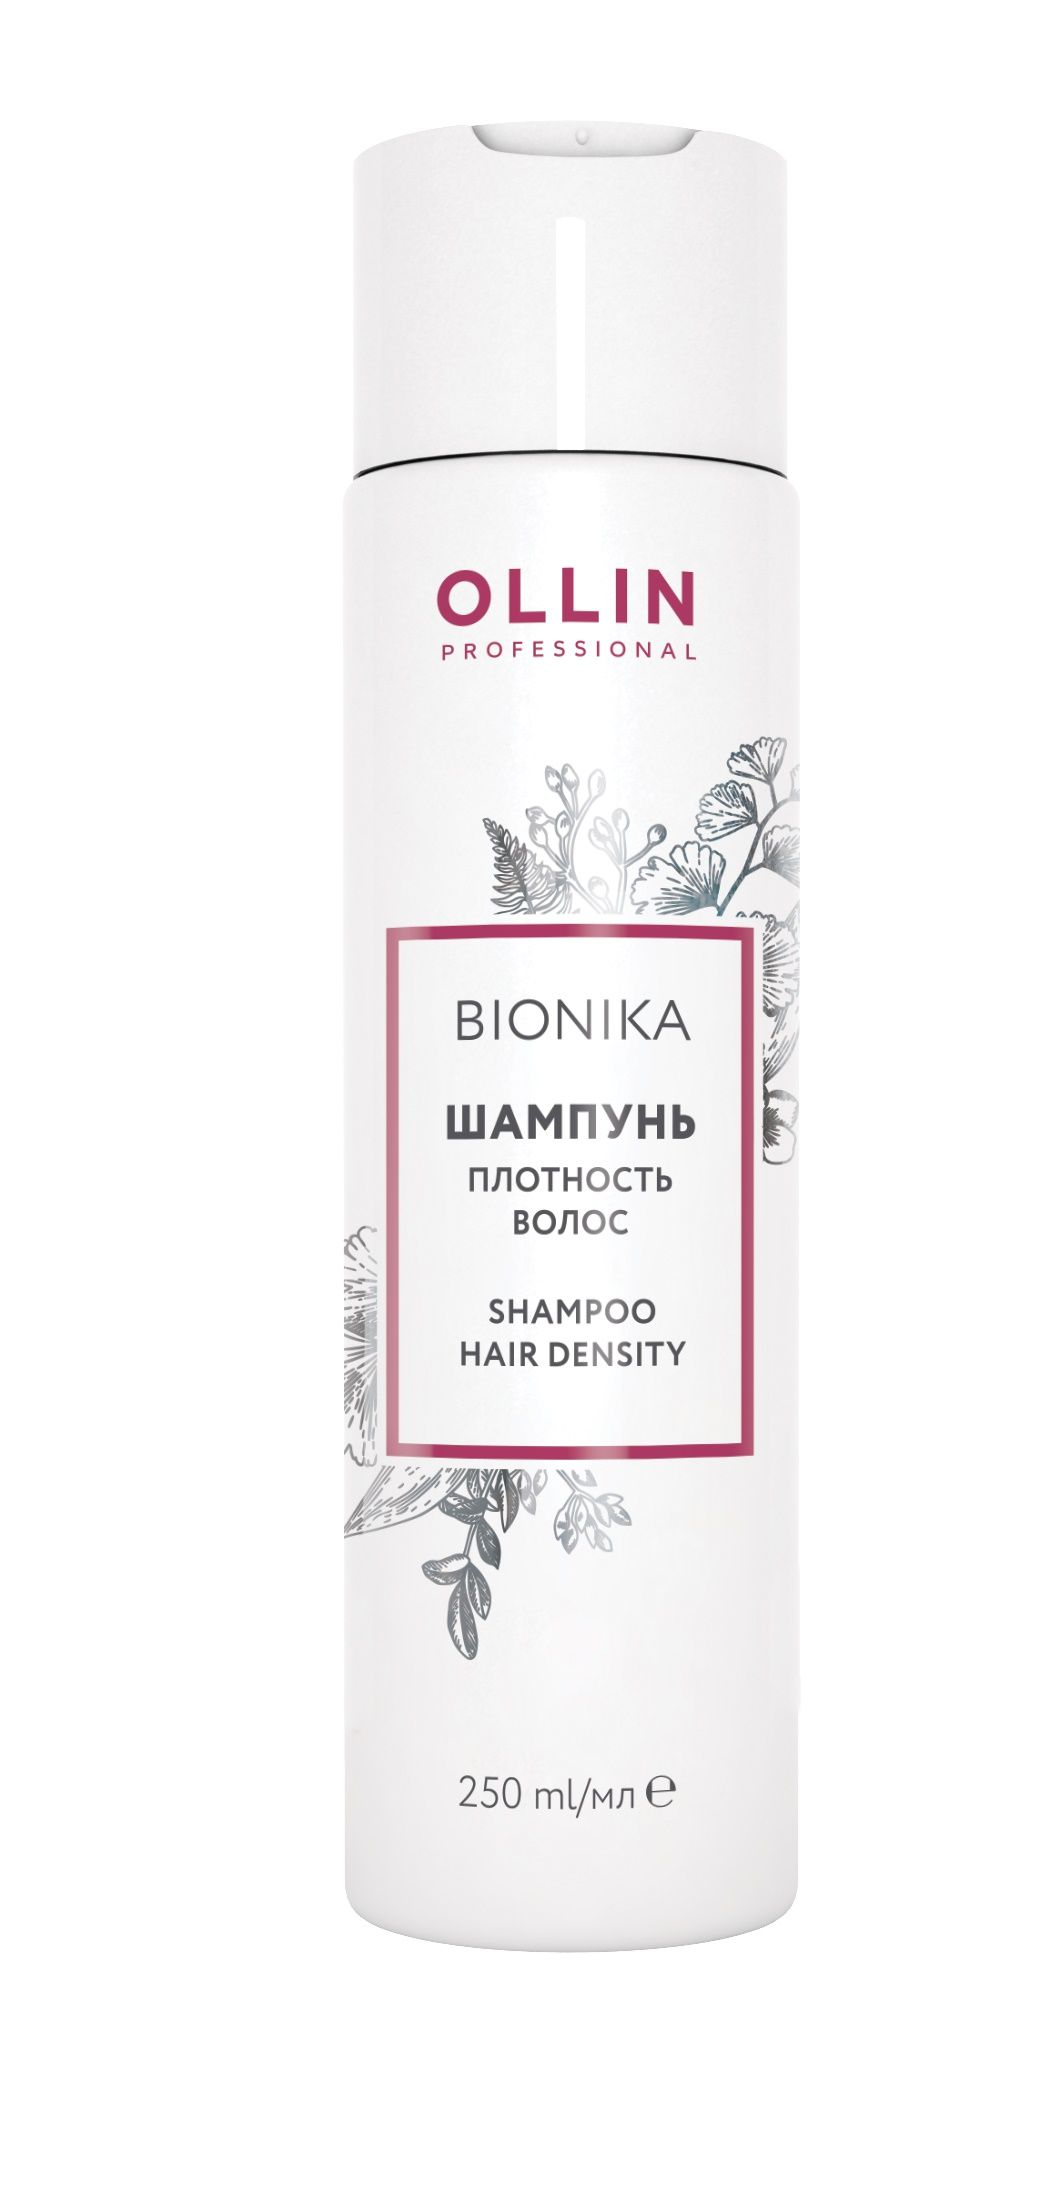 Ollin, Шампунь «Плотность волос» серии «BioNika», Фото интернет-магазин Премиум-Косметика.РФ